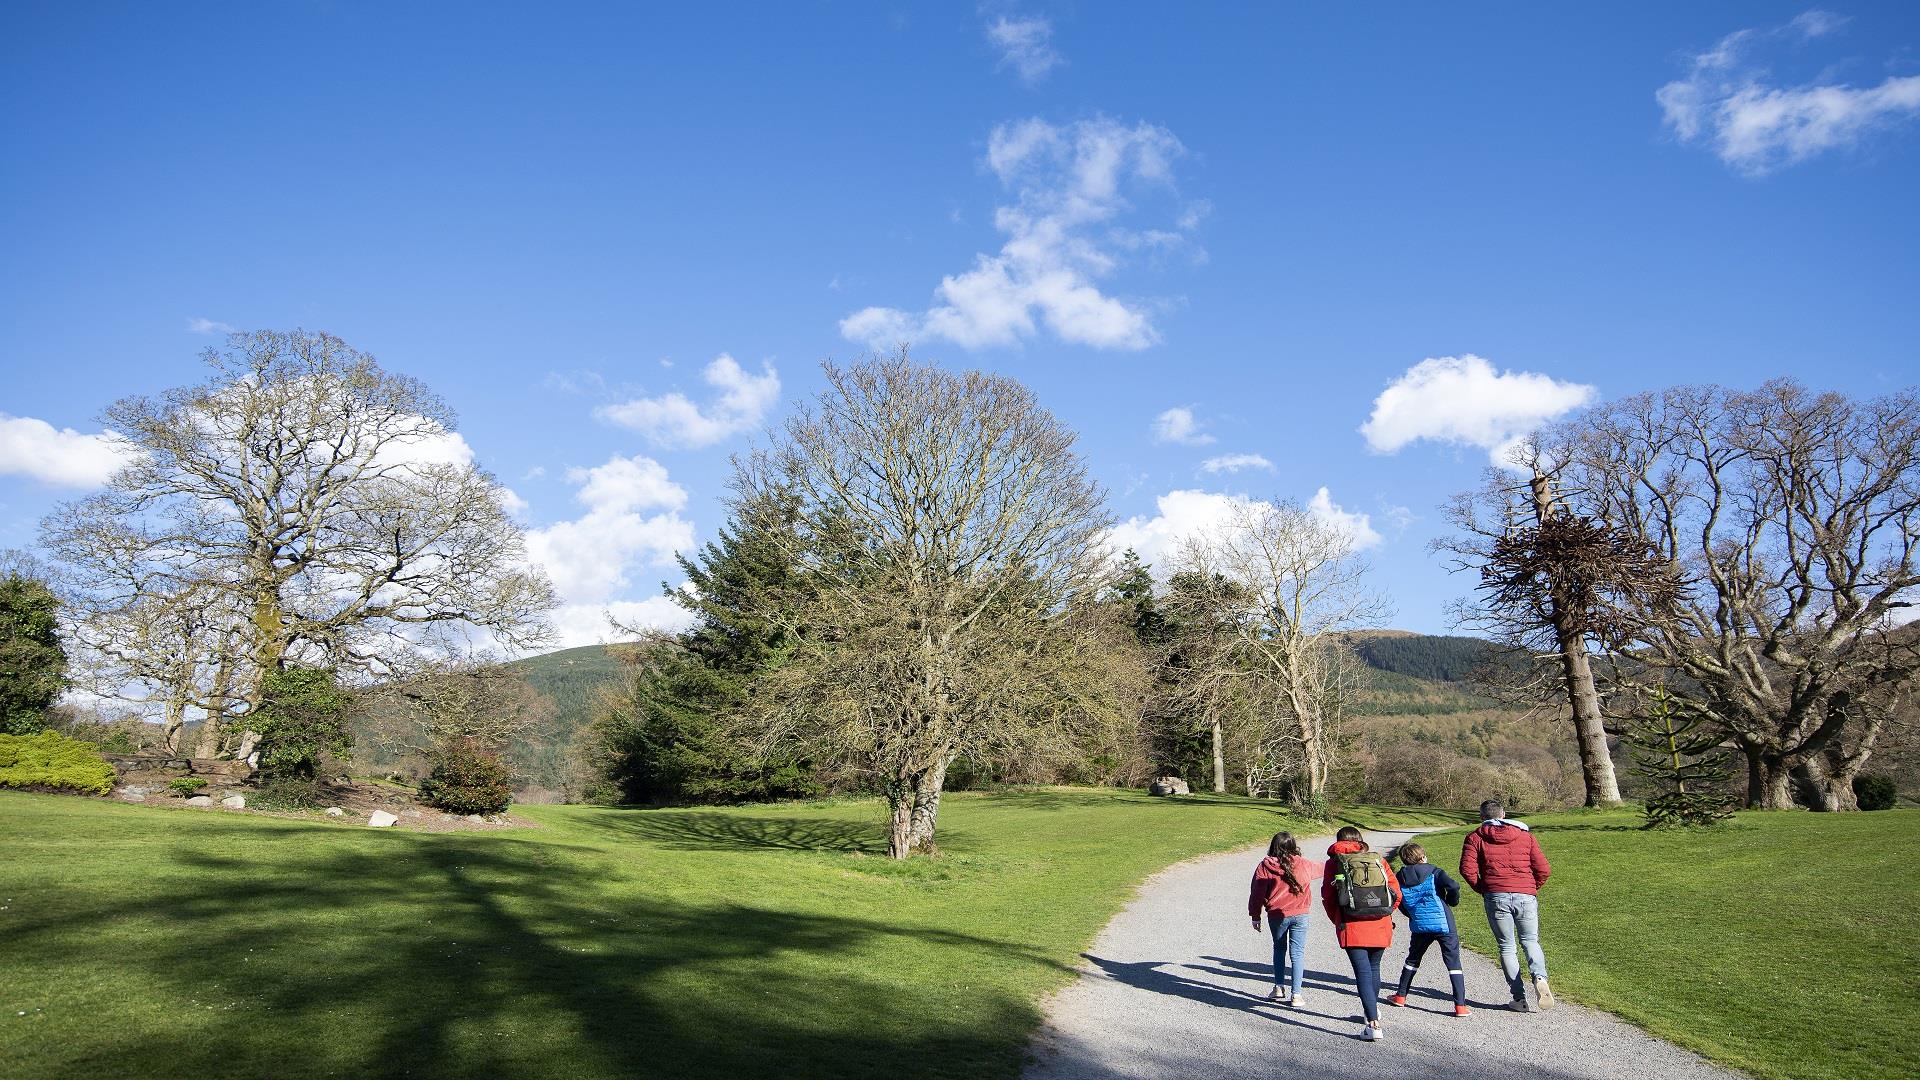 Family walking in Kilbroney Park on a beautiful, sunny day